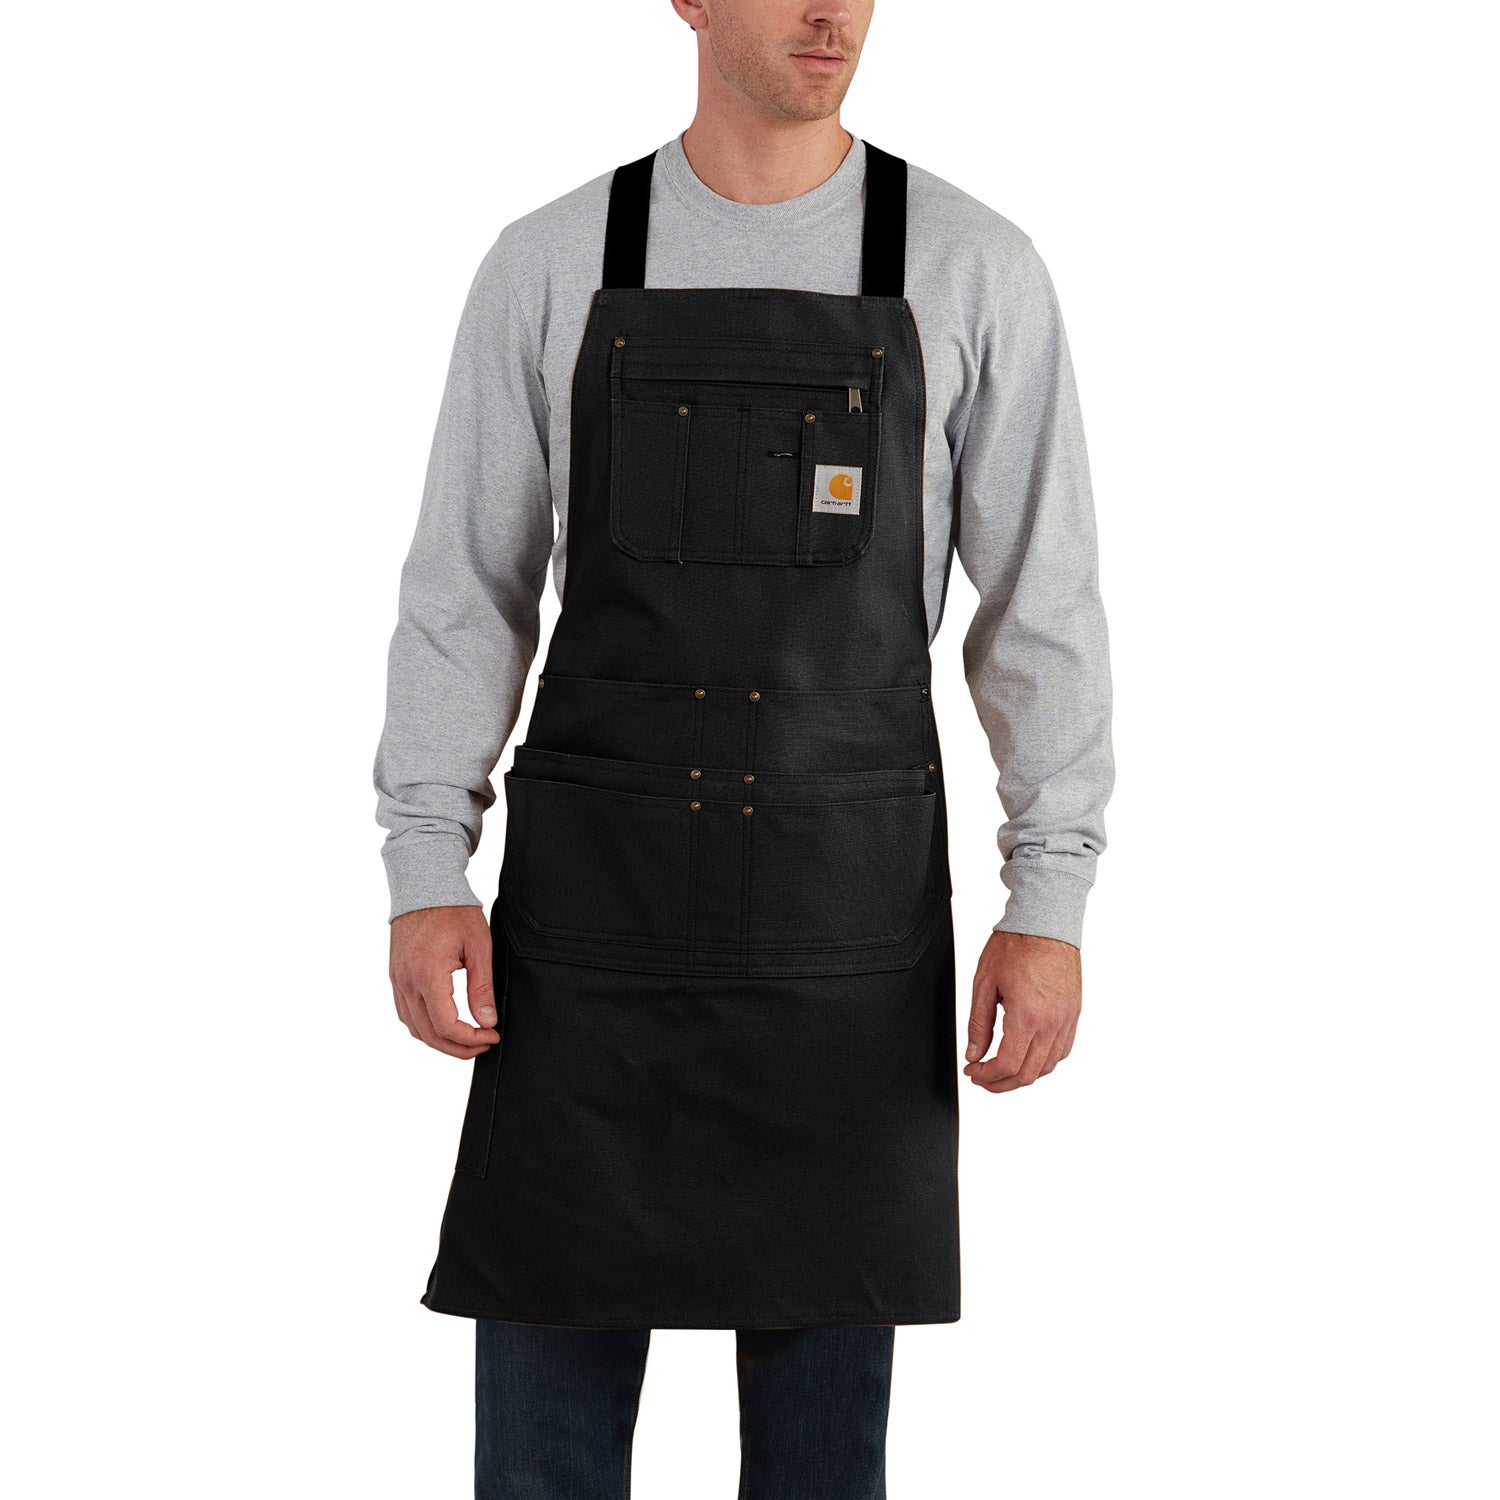 Carhartt Men's Firm Duck Multi-Pocket Apron - Work World - Workwear, Work Boots, Safety Gear